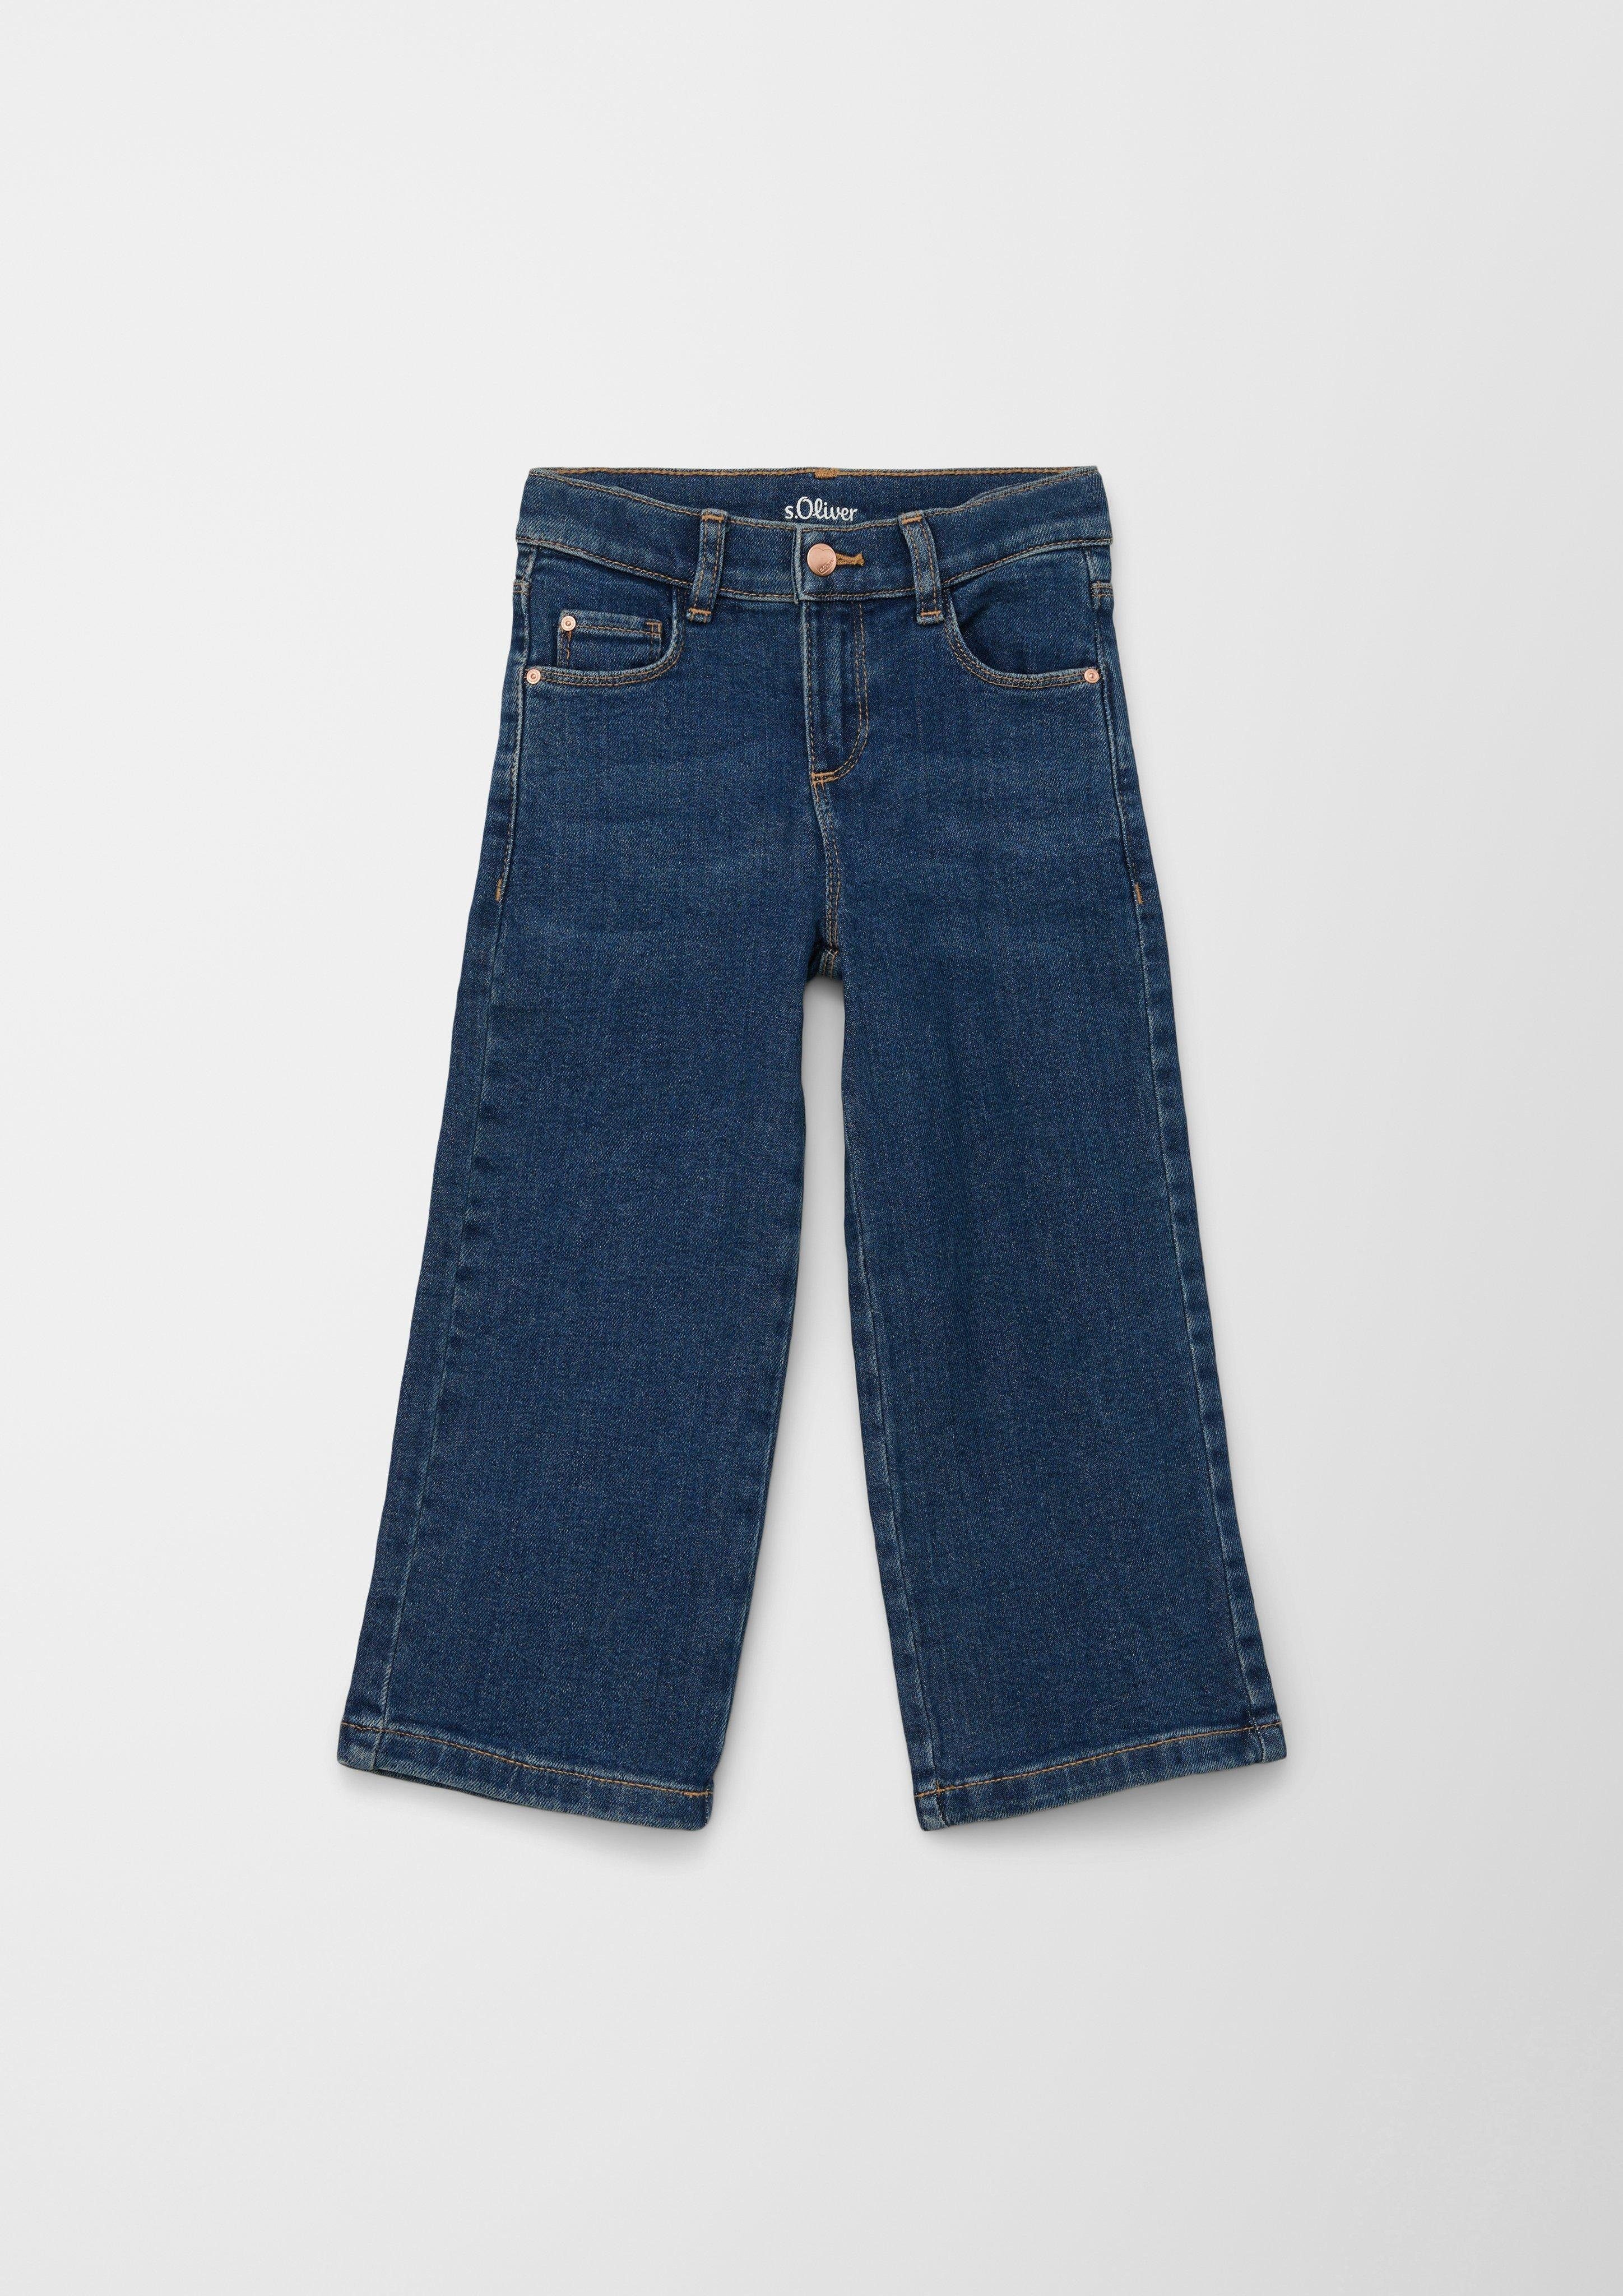 s.Oliver Stoffhose Jeans / Regular Fit / Mid Rise / Wide Leg / Weitenregulierung Waschung, Kontrastnähte